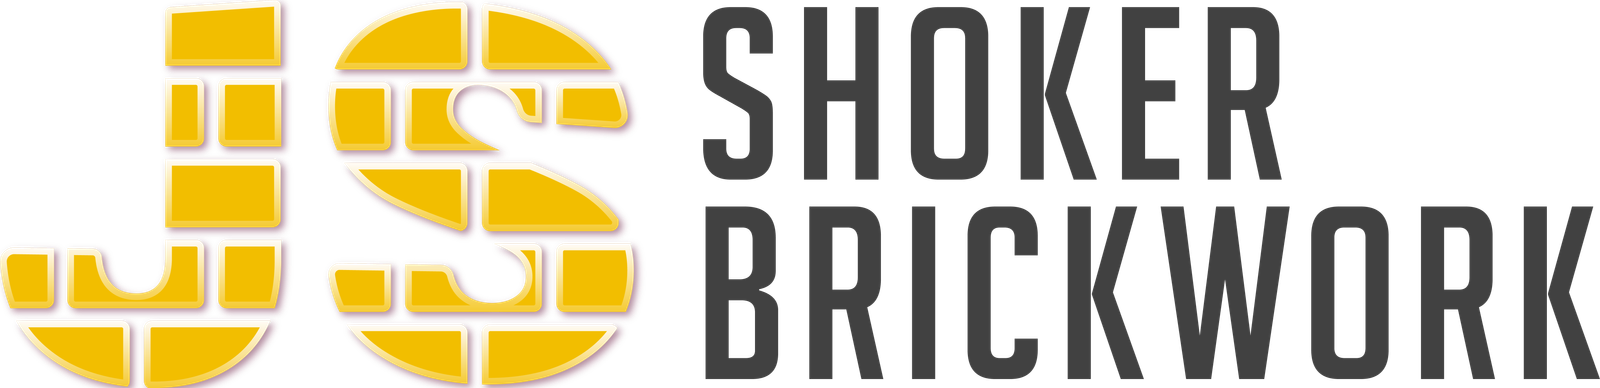 JS Shoker Brick Work Logo